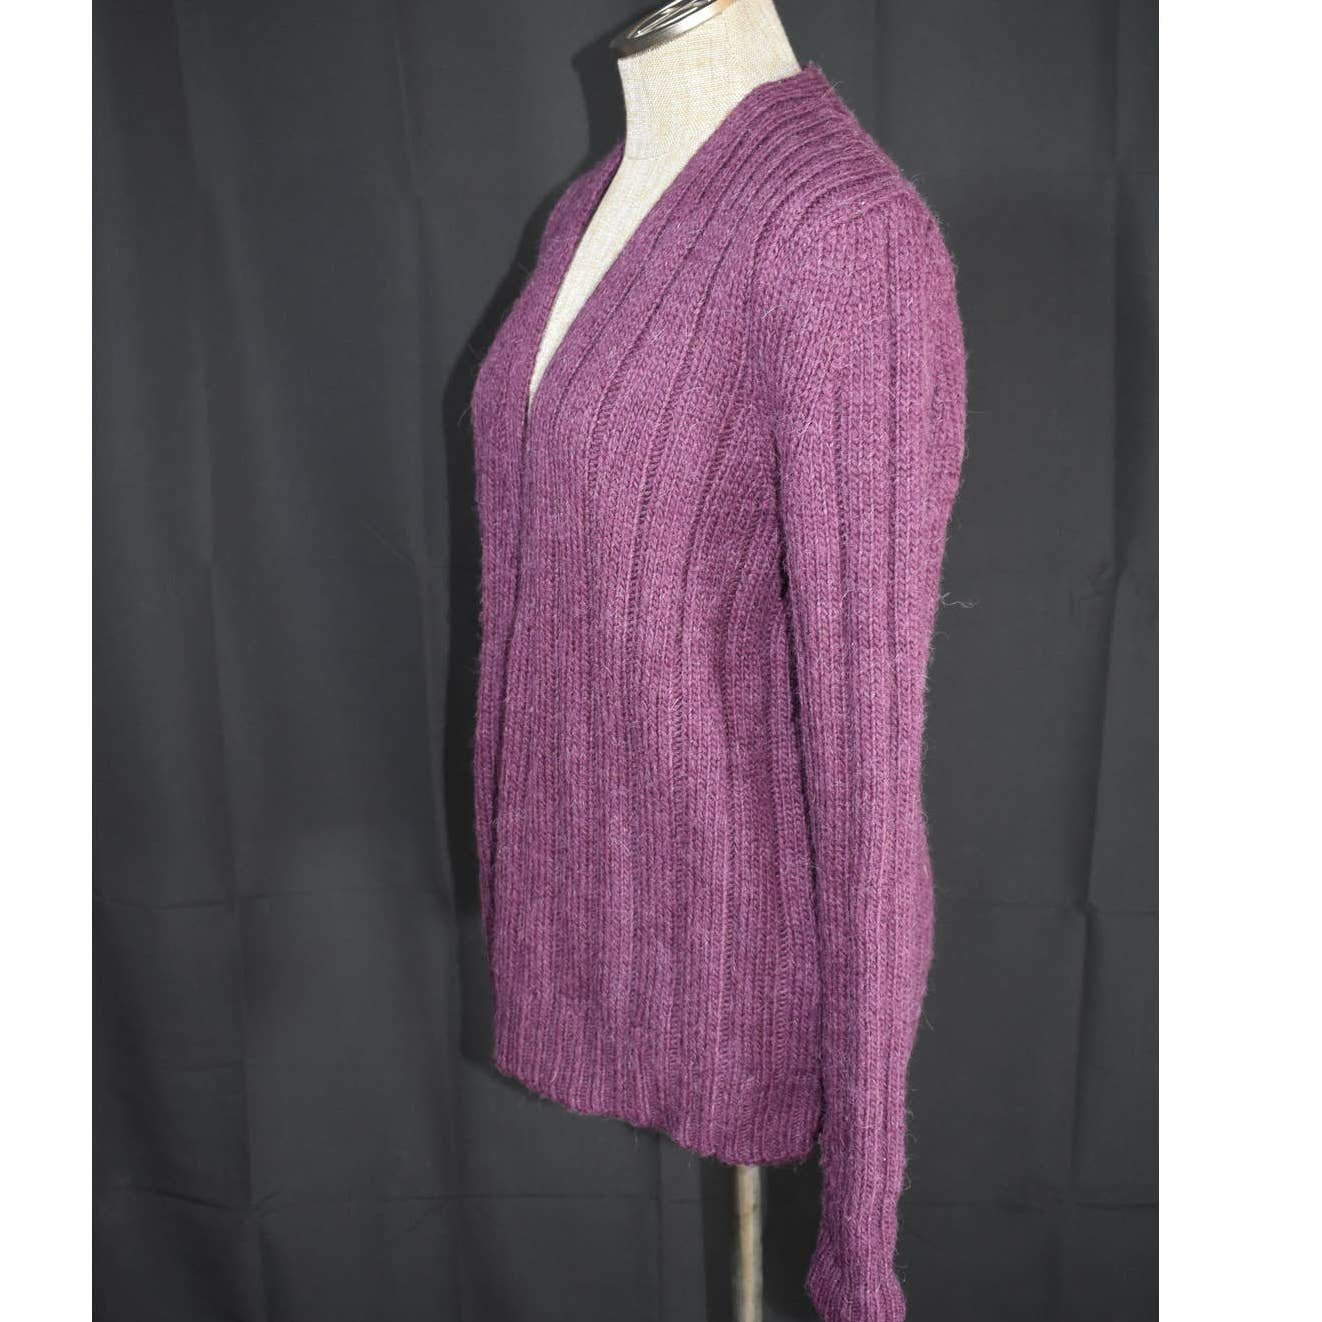 Kate Spade Saturday Purple Alpaca Wool Cardigan Sweater - S